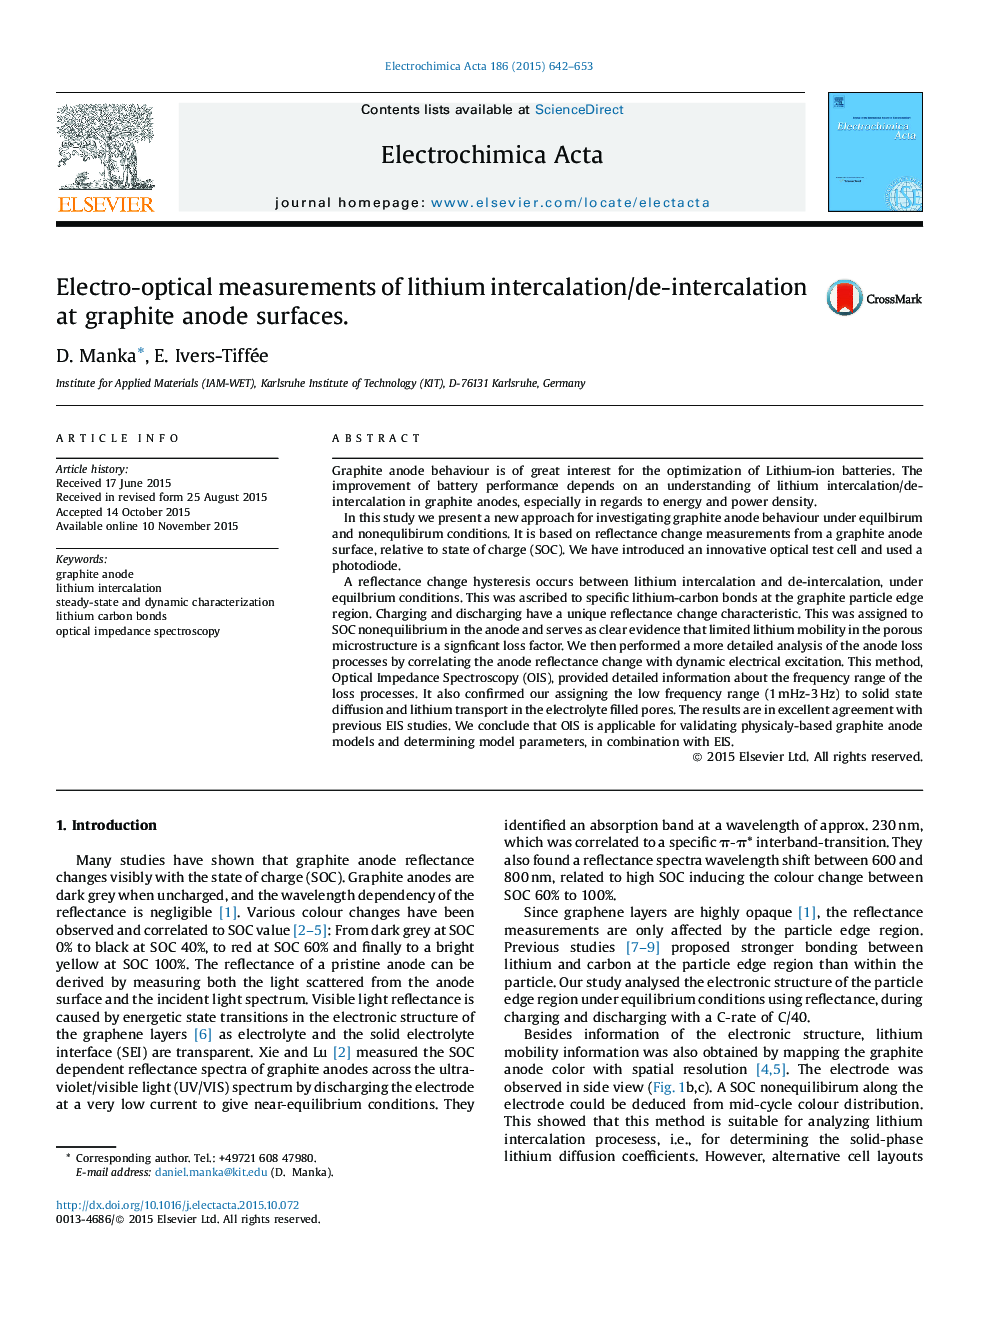 Electro-optical measurements of lithium intercalation/de-intercalation at graphite anode surfaces.